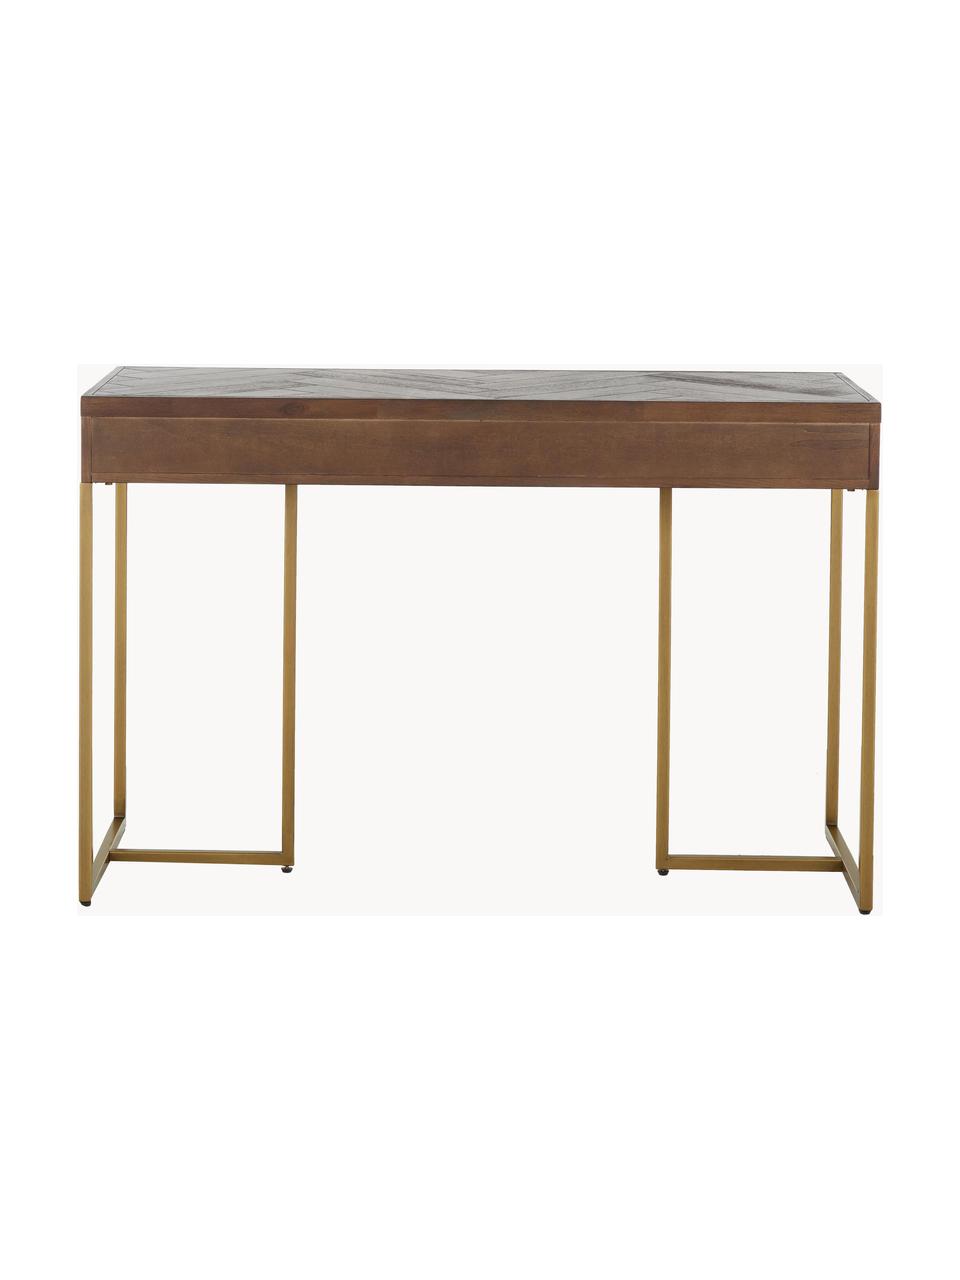 Konzolový stolek s dýhou z  akáciového dřeva Class, Dřevo, Š 120 cm, V 80 cm